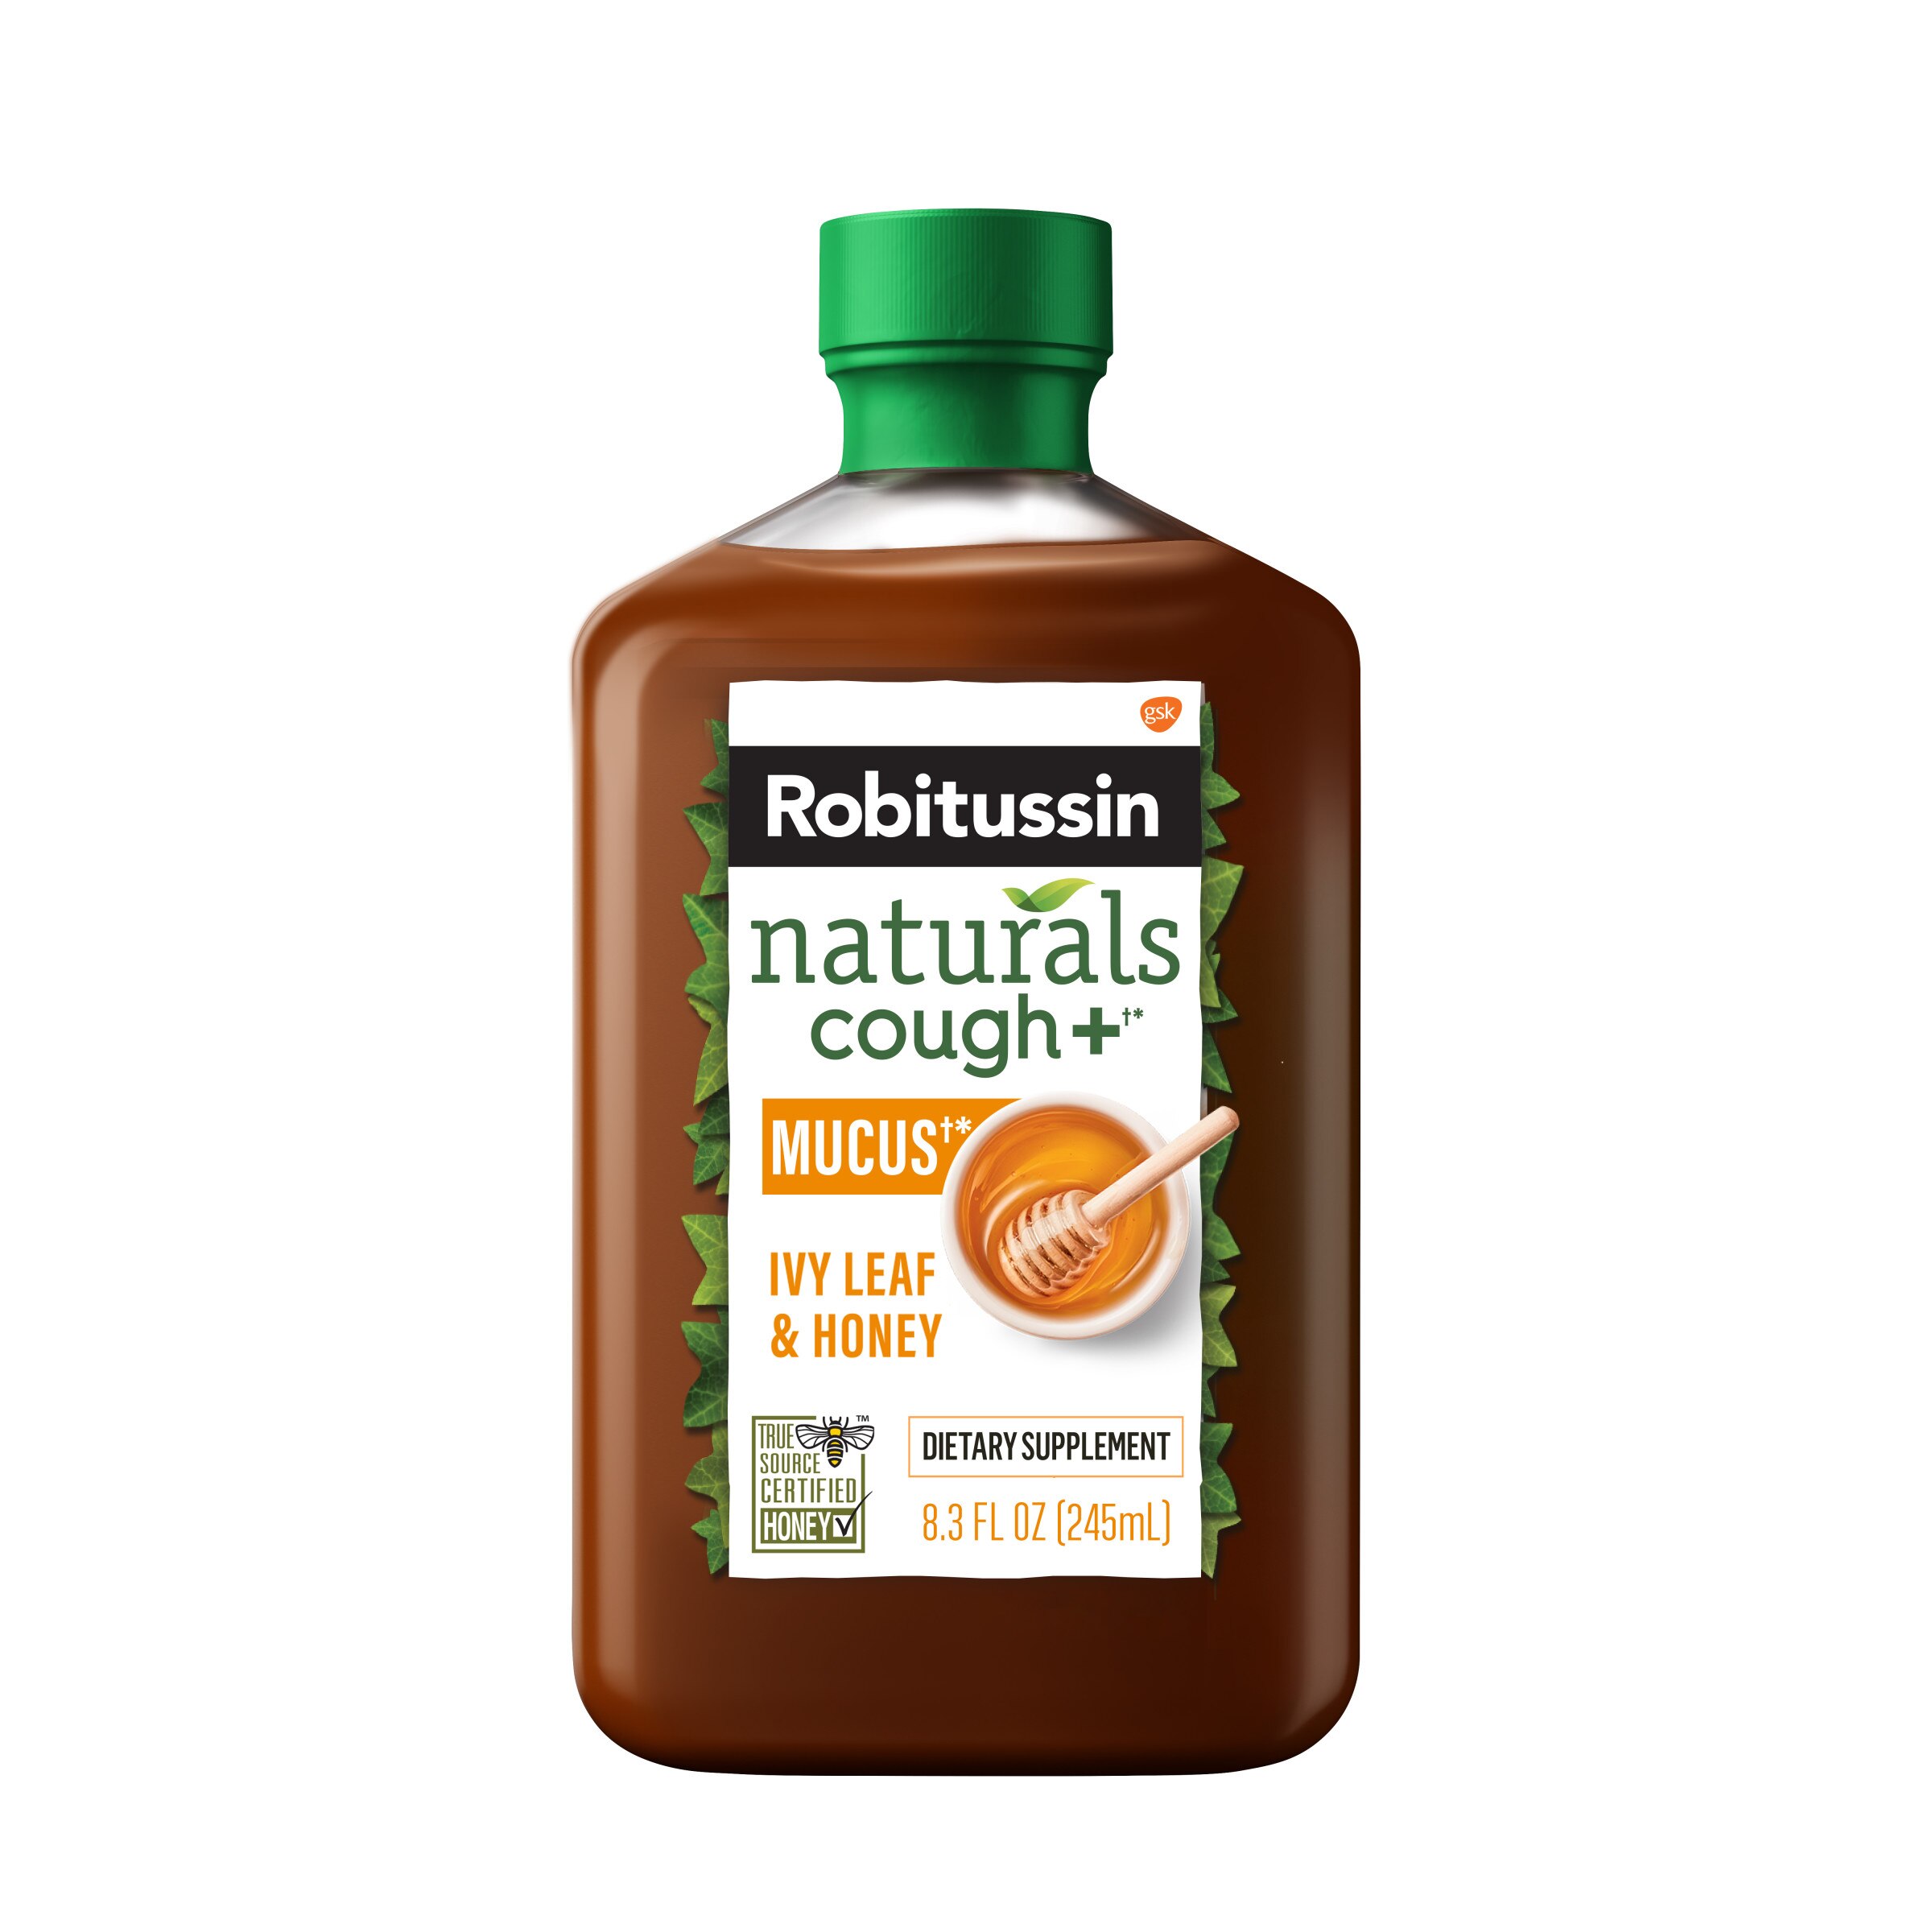 Robitussin Naturals, Cough Relief - Suplemento dietario, Honey & Ivy Leaf, 8.3 oz líq.